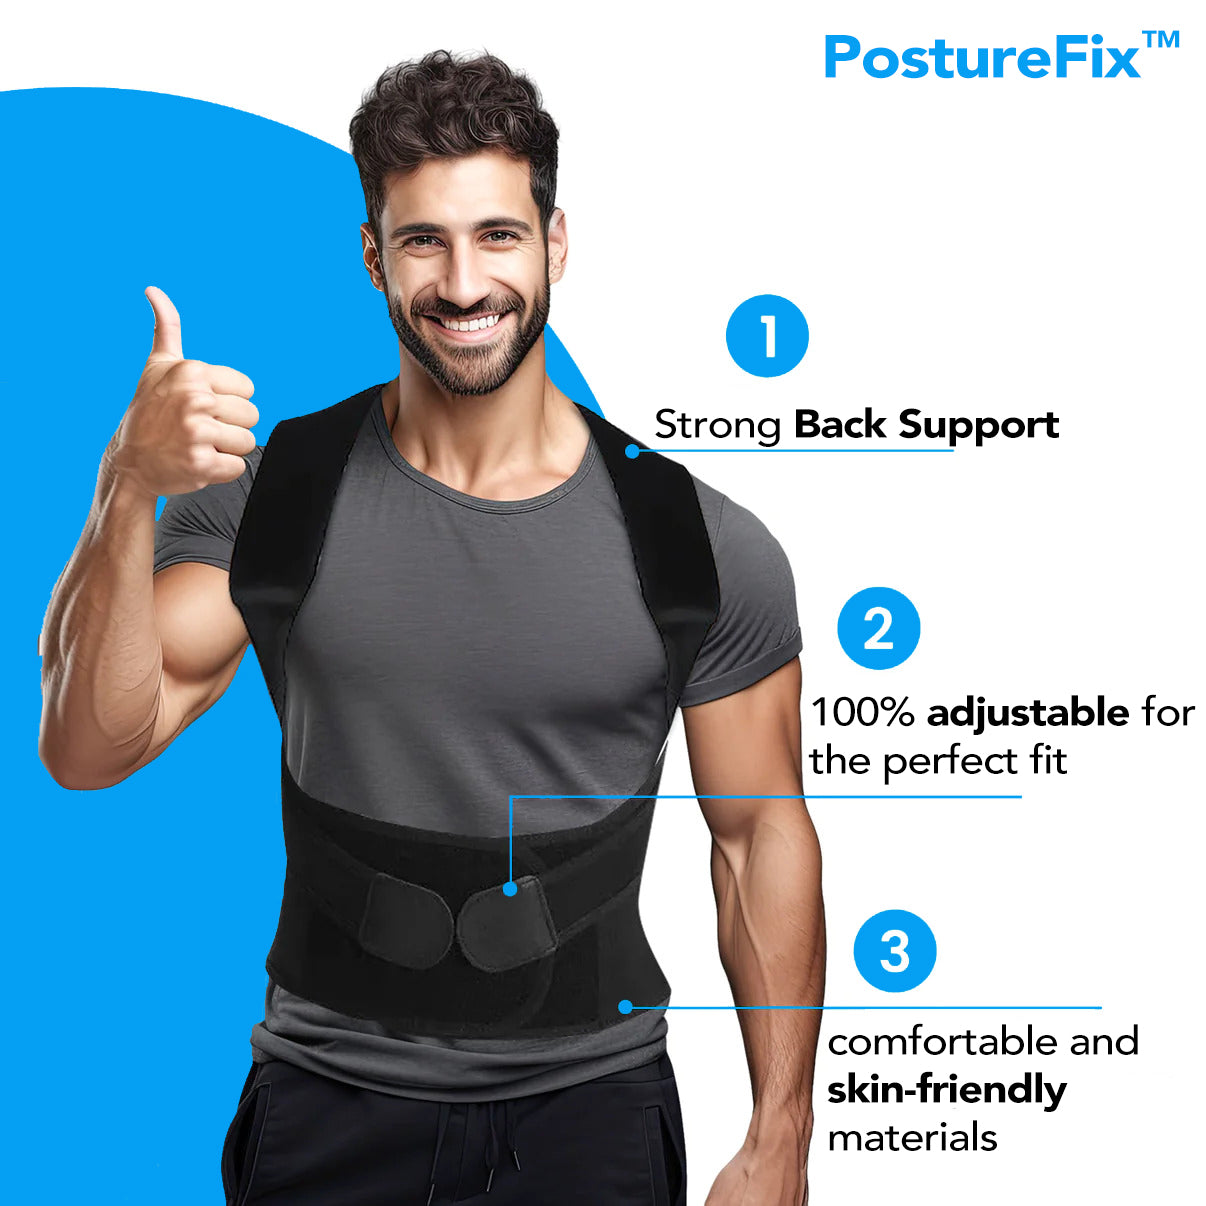 HyroLabs PostureFix™